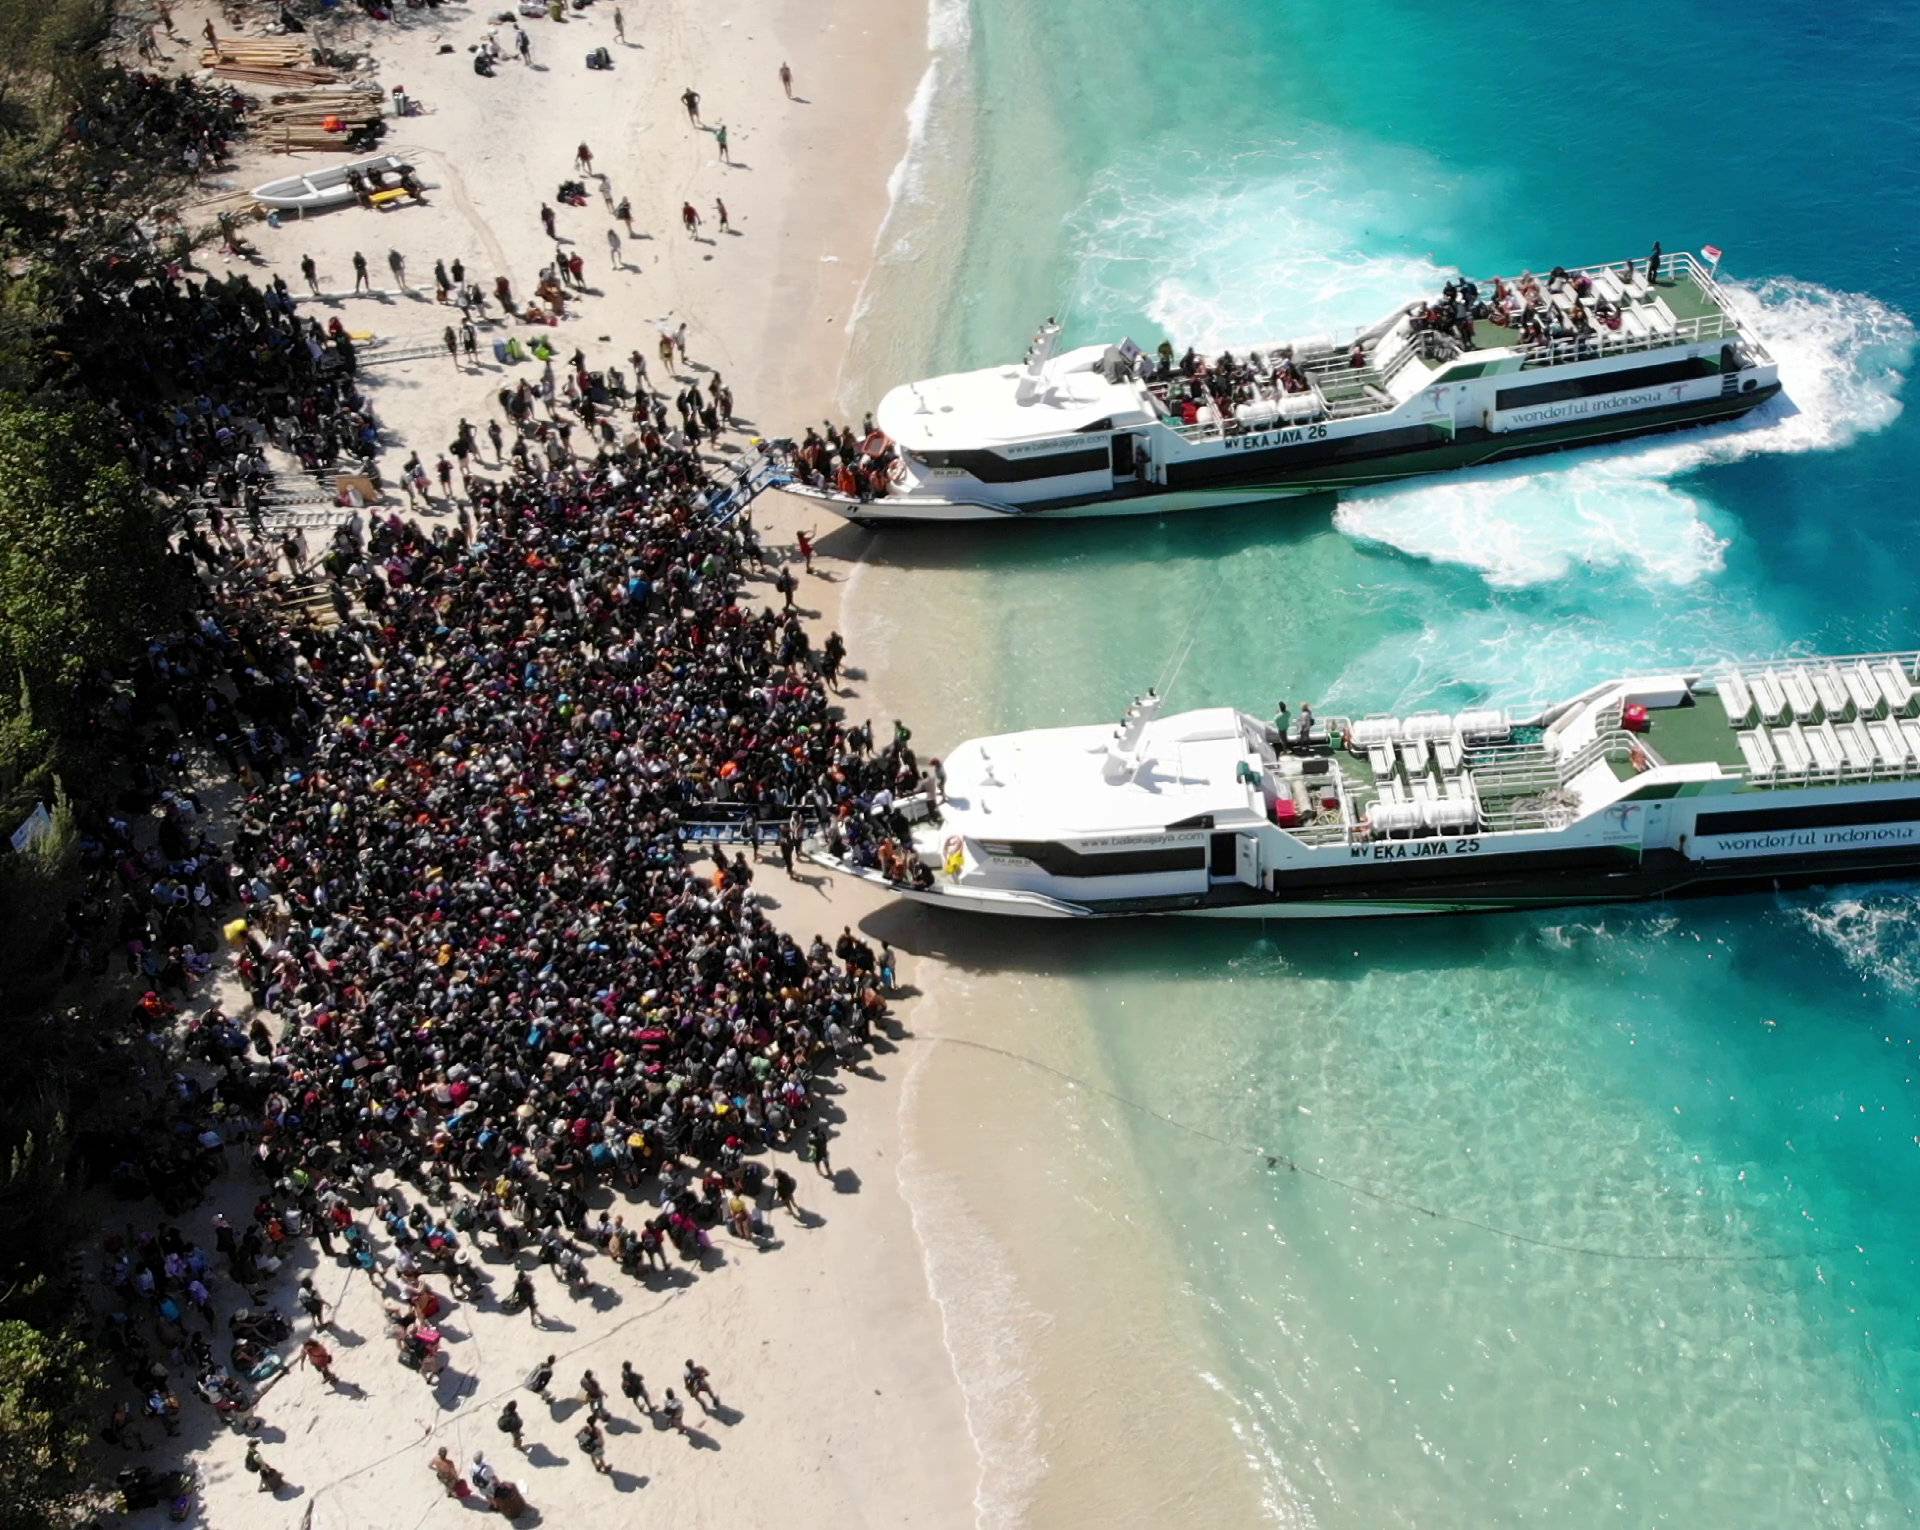 Boats arrive at shore to evacuate people on the island of Gili Trawangan, Lombok